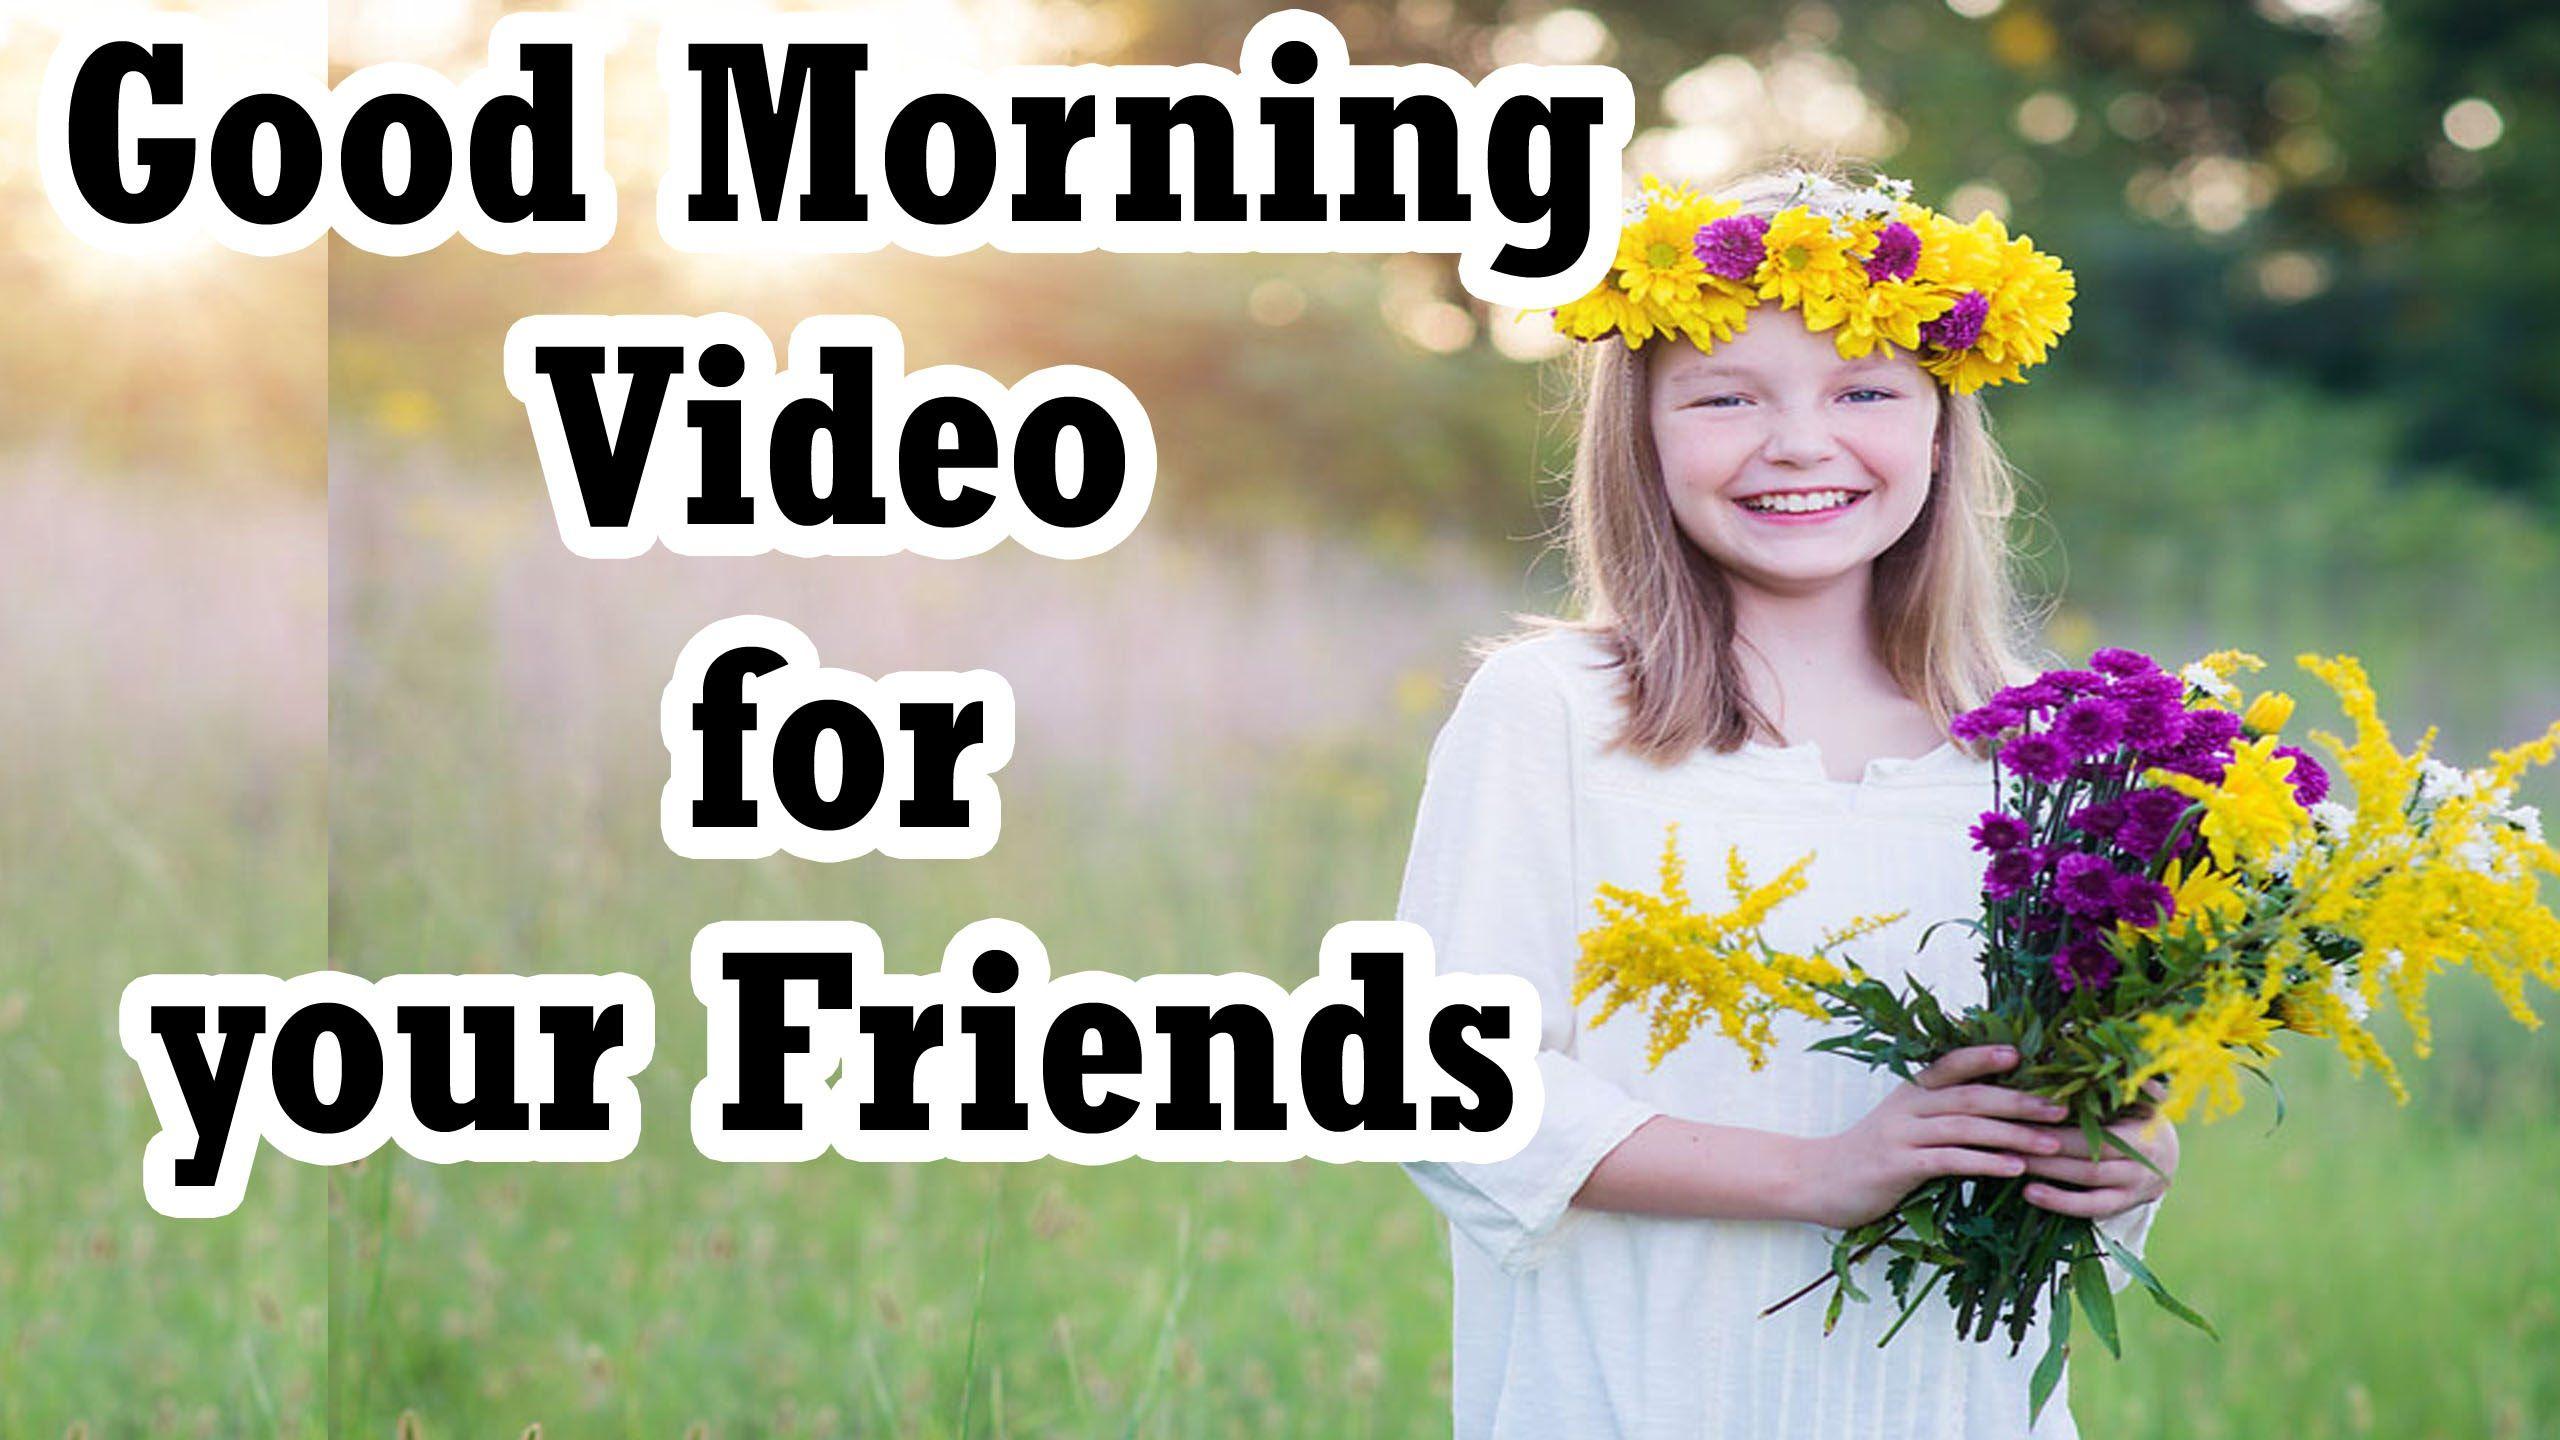 Good Morning Video HD wallpaper, Good Morning Video Image